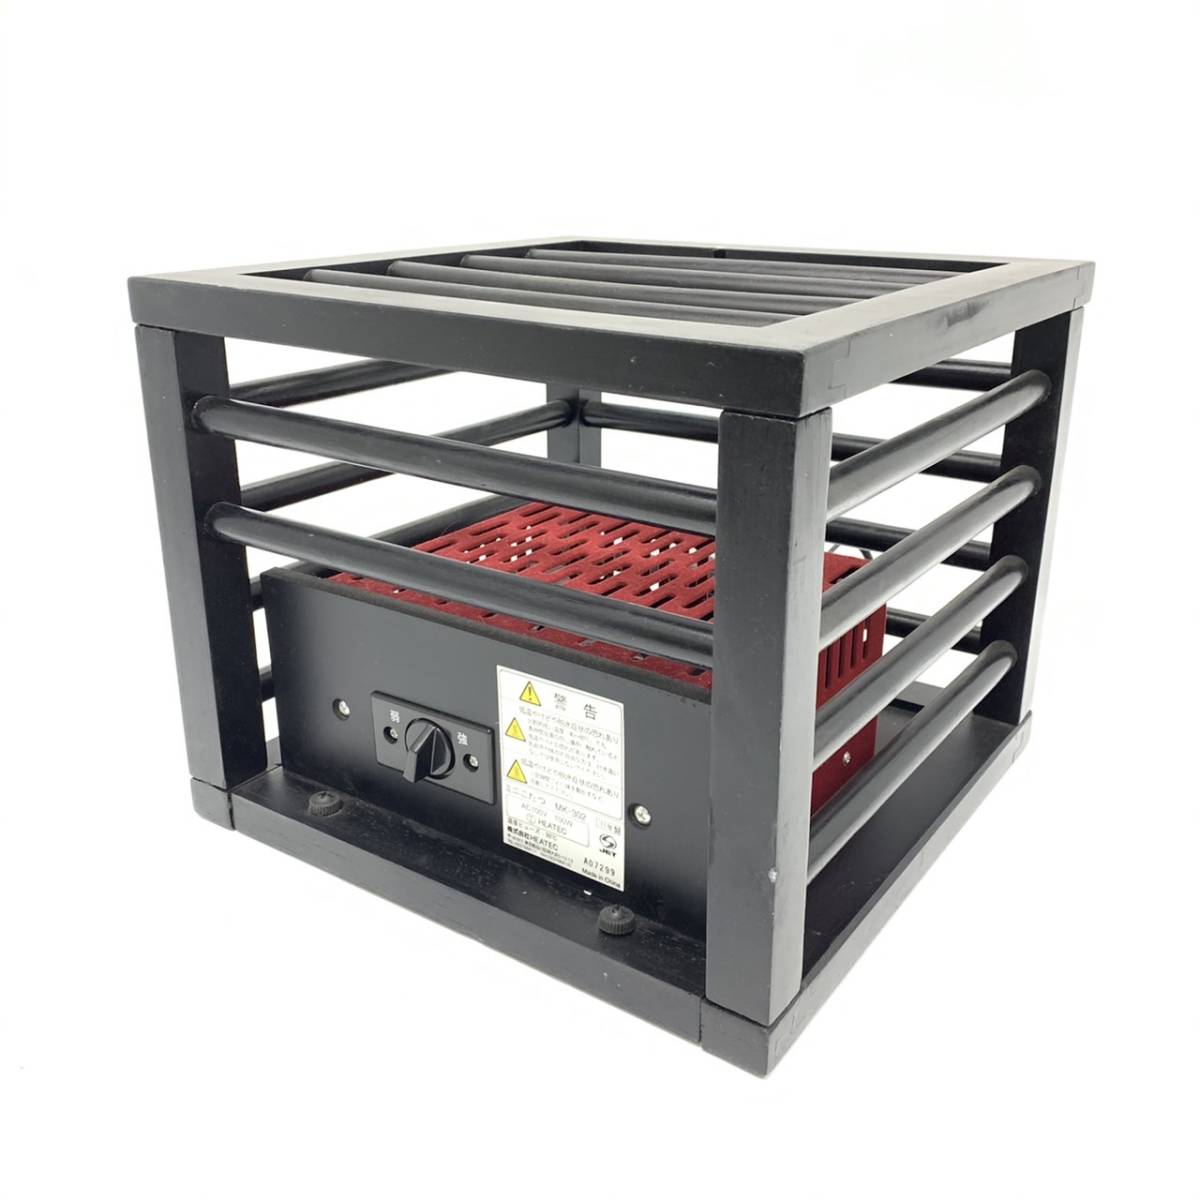  free shipping h56636 HEATEChi- Tec Mini kotatsu MK-302 underfoot kotatsu heating home heater carrying 2011 year made 